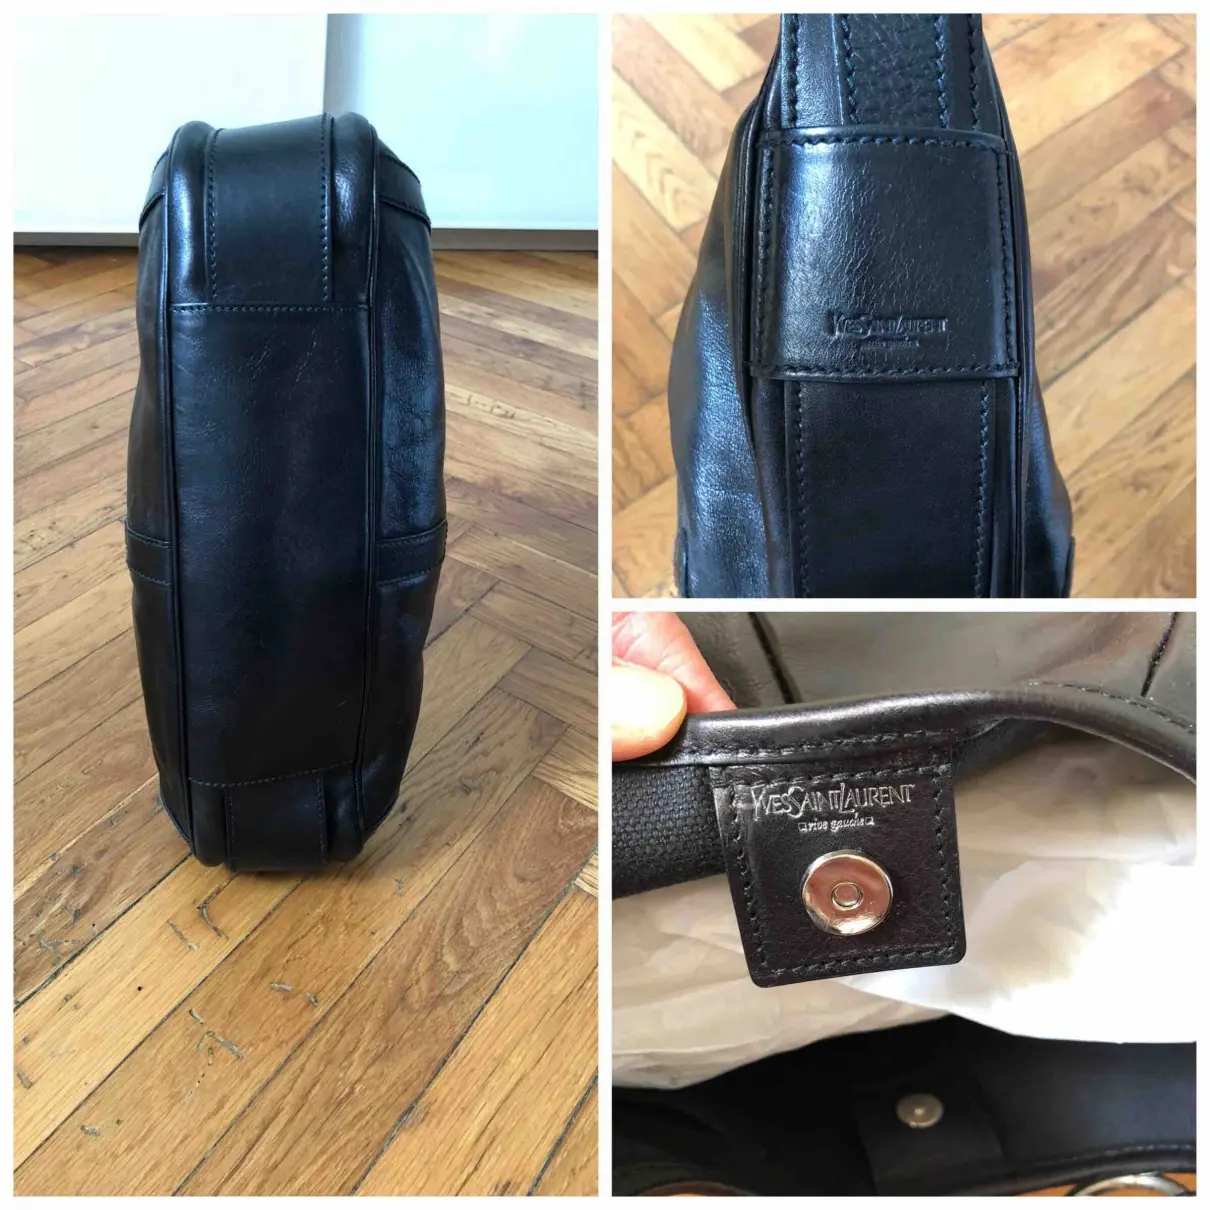 Buy Yves Saint Laurent Mombasa leather handbag online